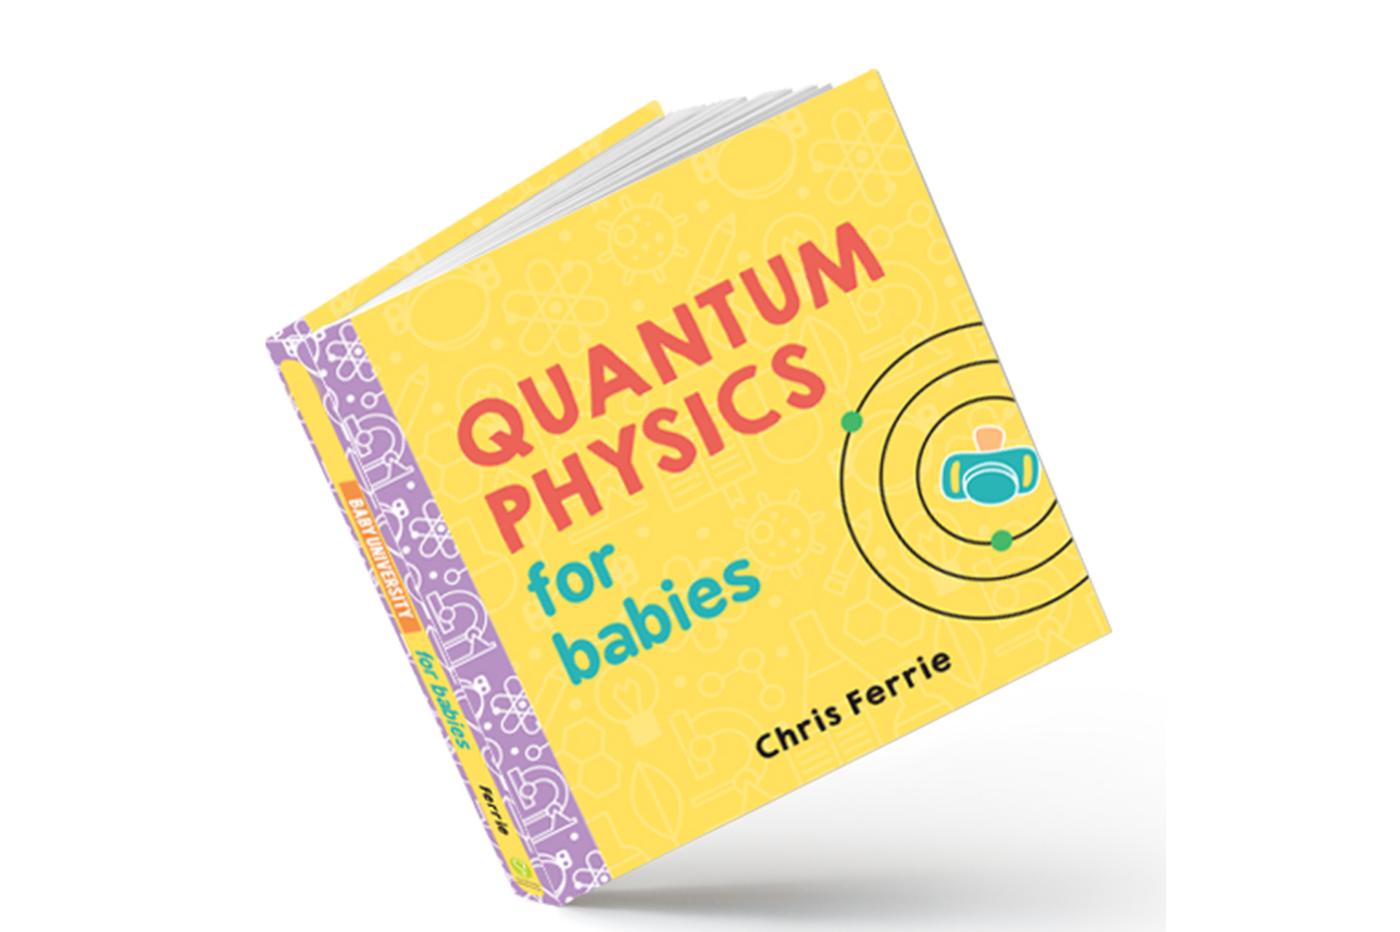 Quantum physics for babies